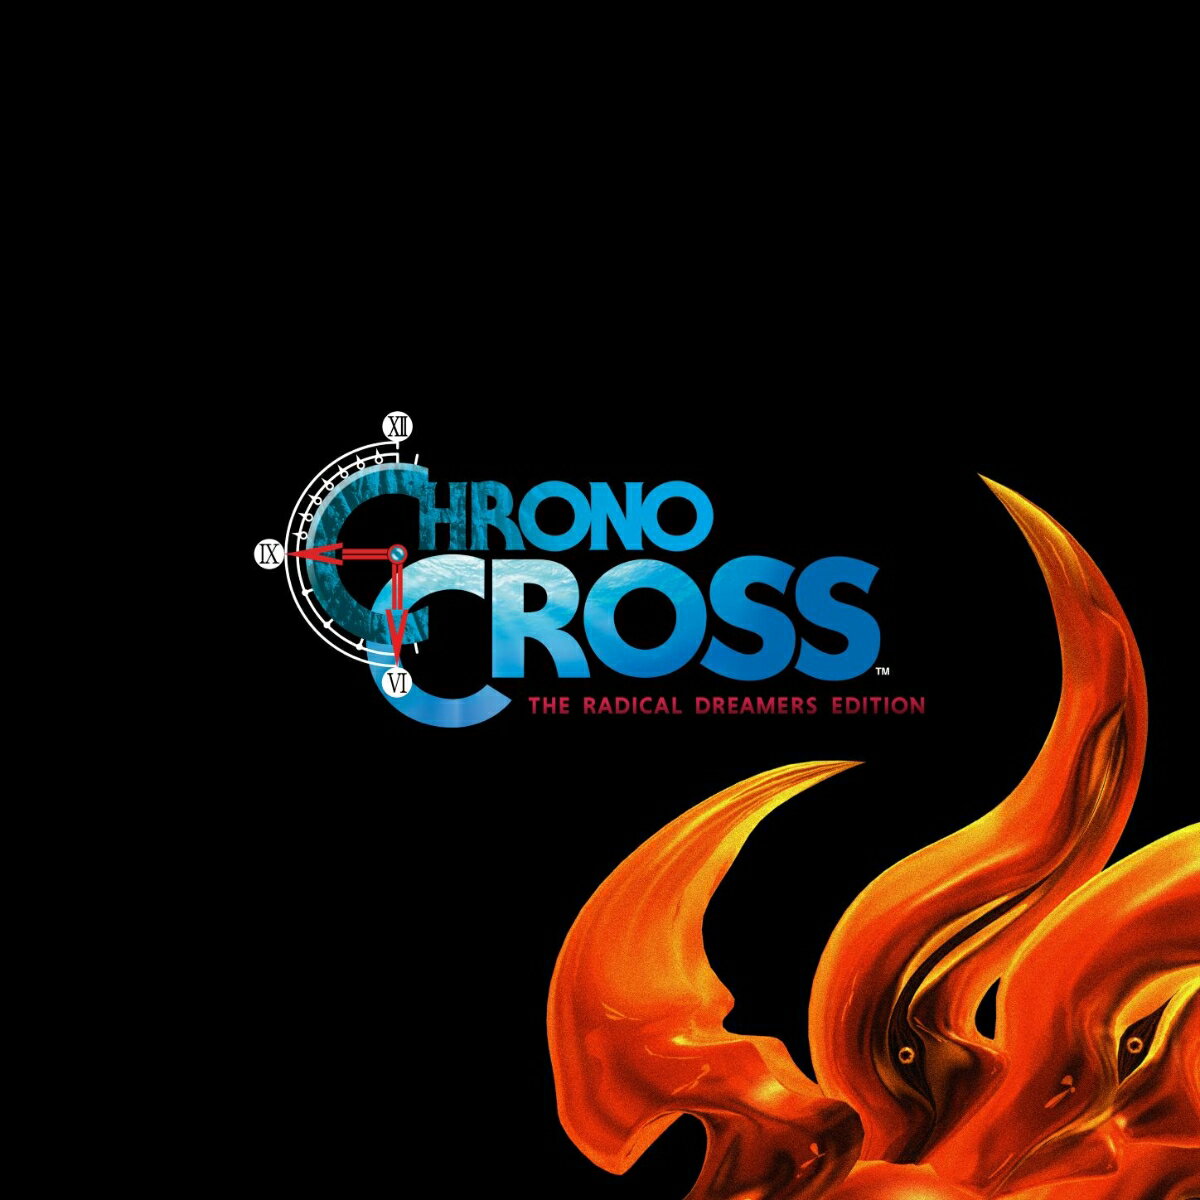 CHRONO CROSS: THE RADICAL DREAMERS EDITION Vinyl【アナログ盤】 (ゲーム ミュージック)